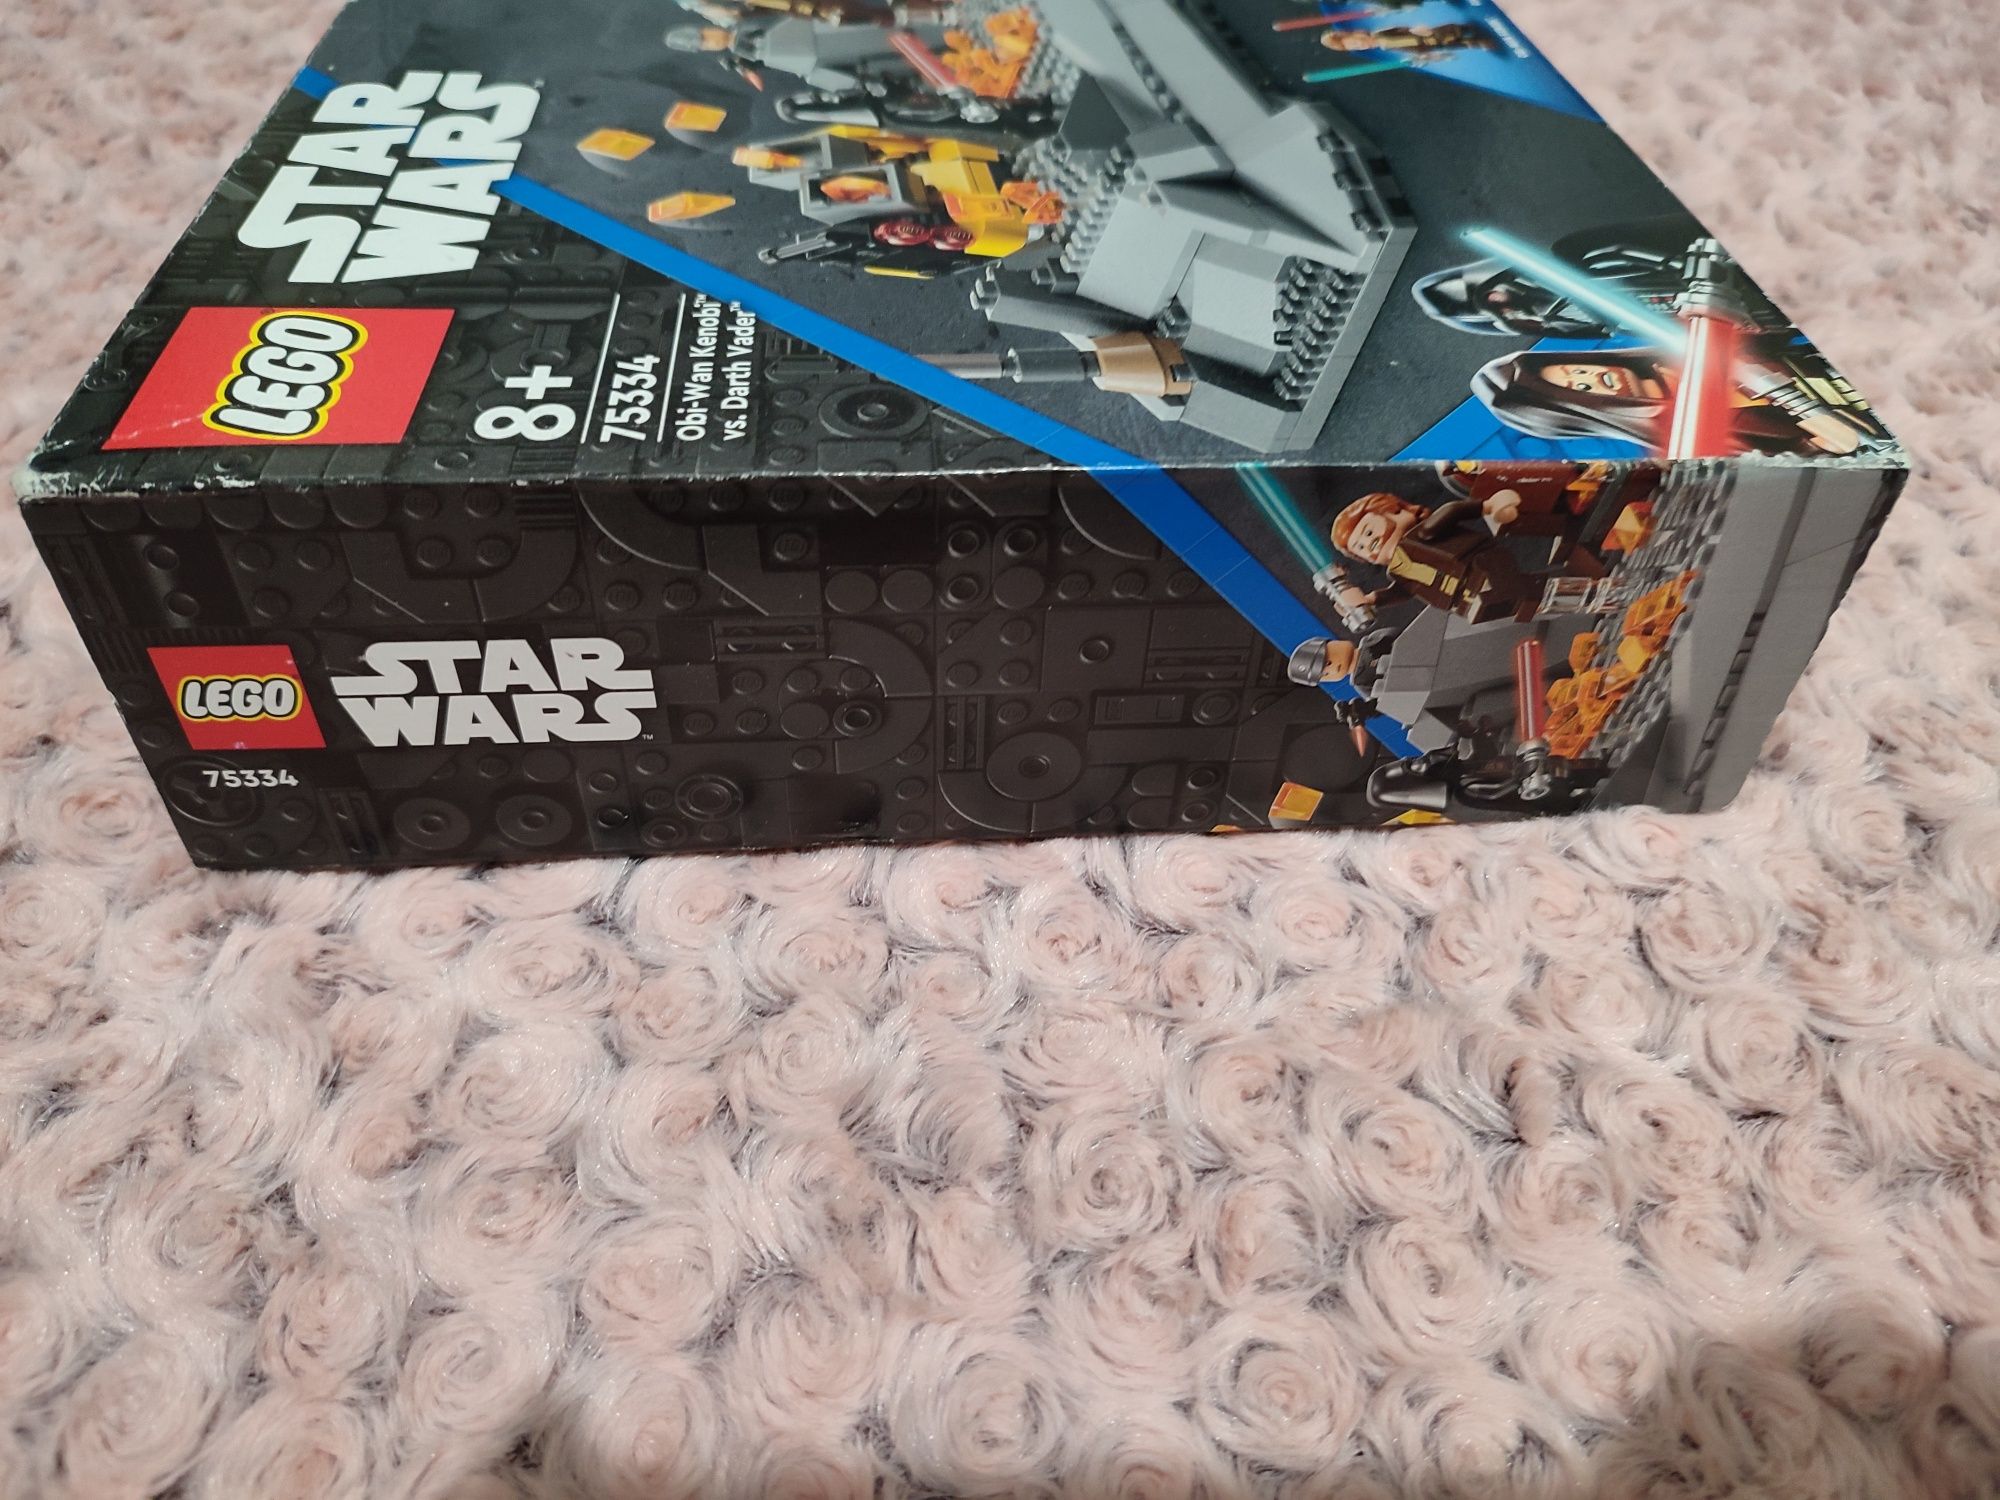 Lego oficial 75334 Star Wars Obi-Wan Kenobi vs Darth Vader